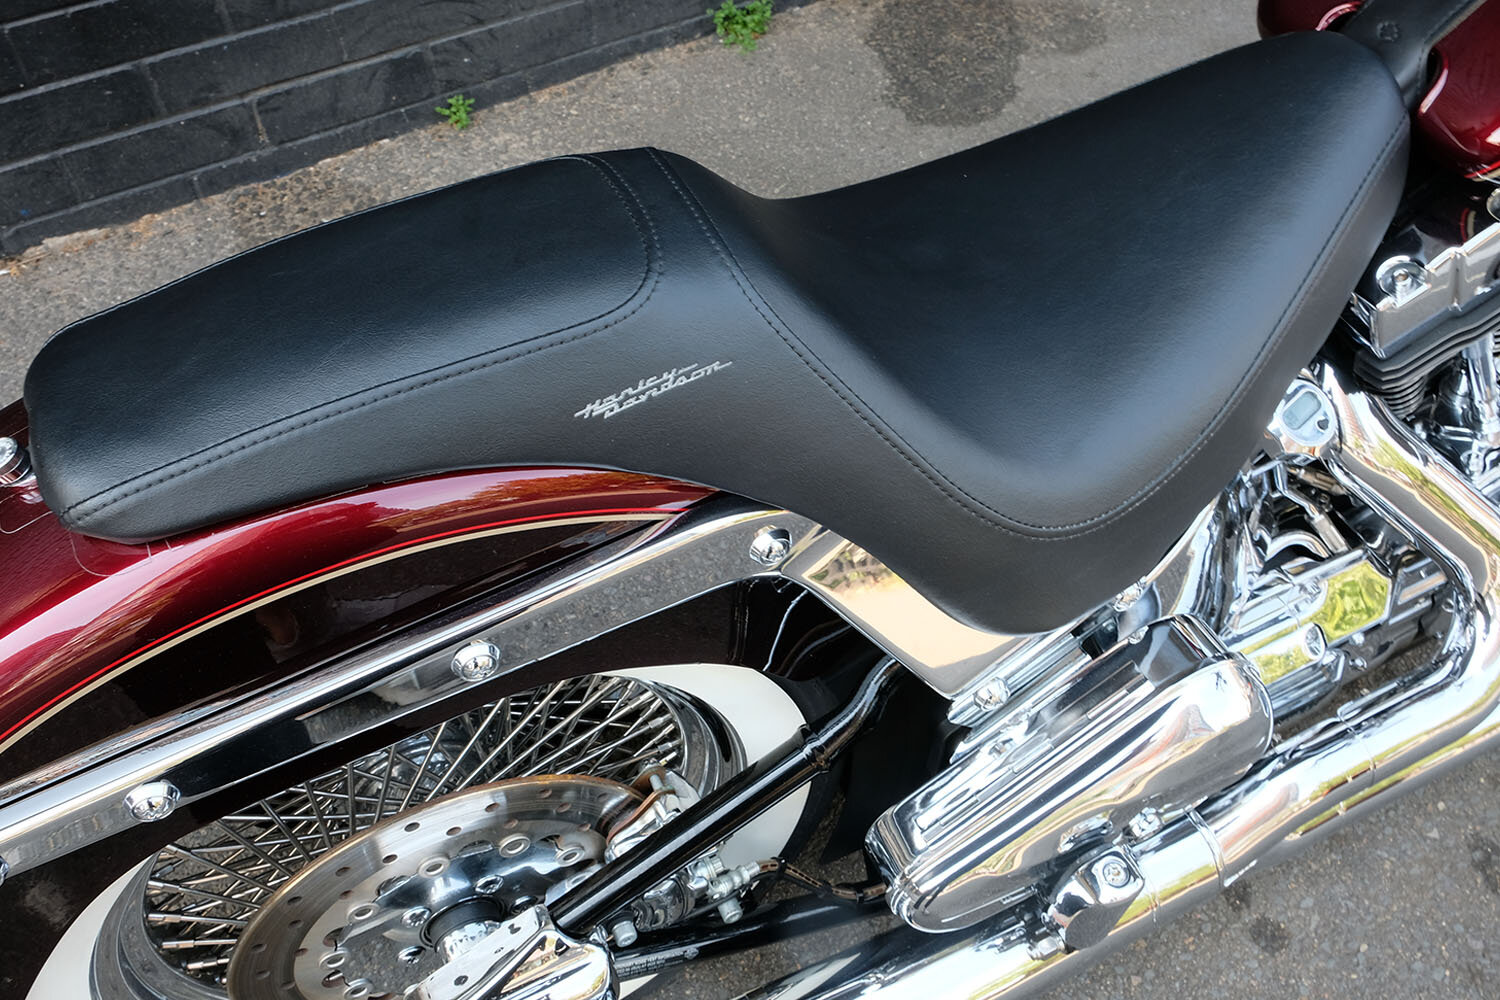 2014 Harley Davidson Softail Deluxe_0024_DSCF0229.jpg